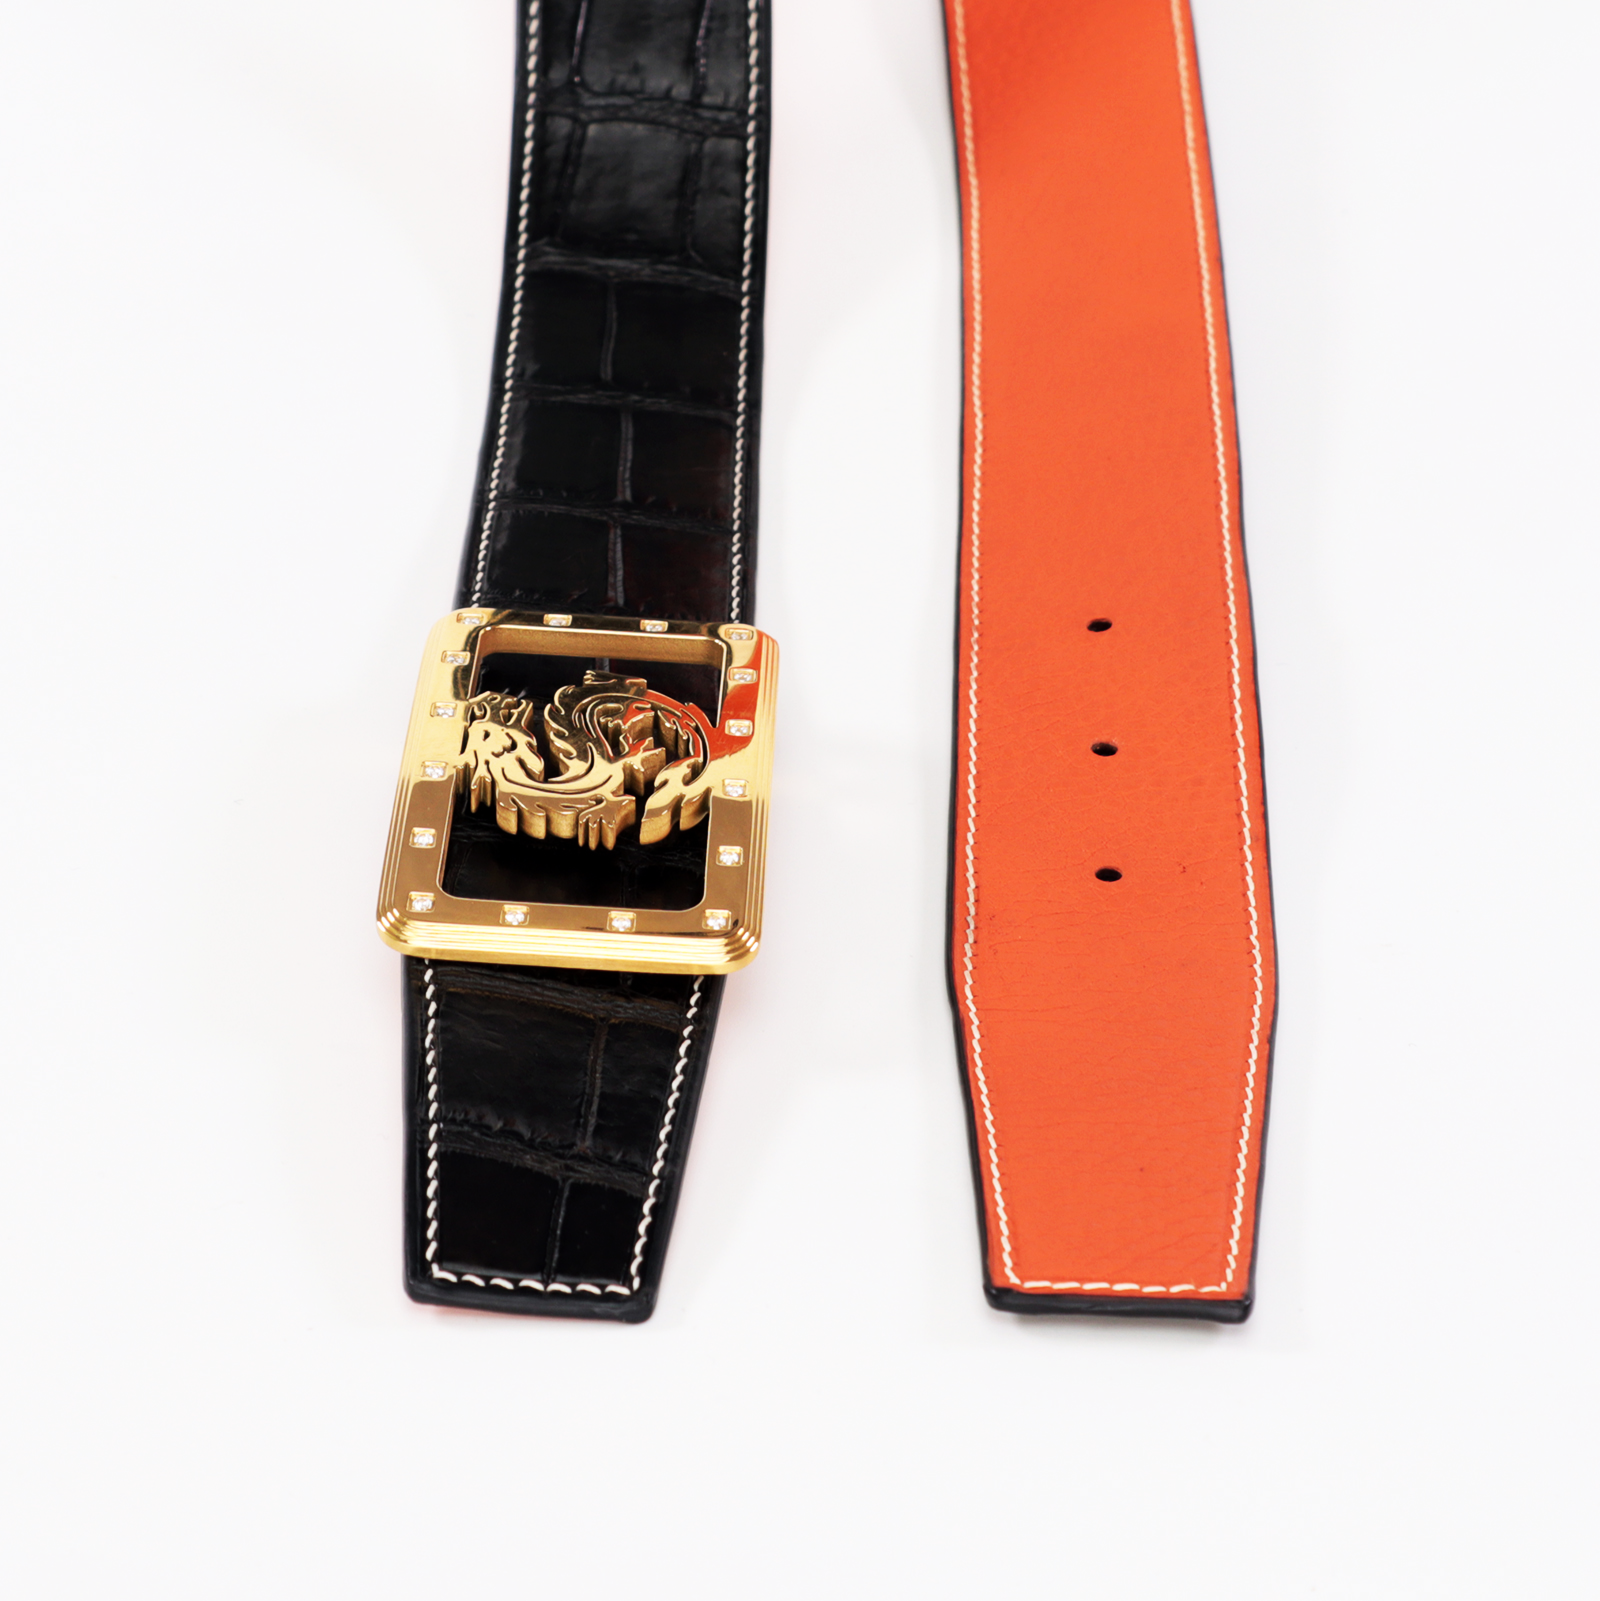 Men's Classic Crocodile Belt - Genuine Leather and Elegant Design